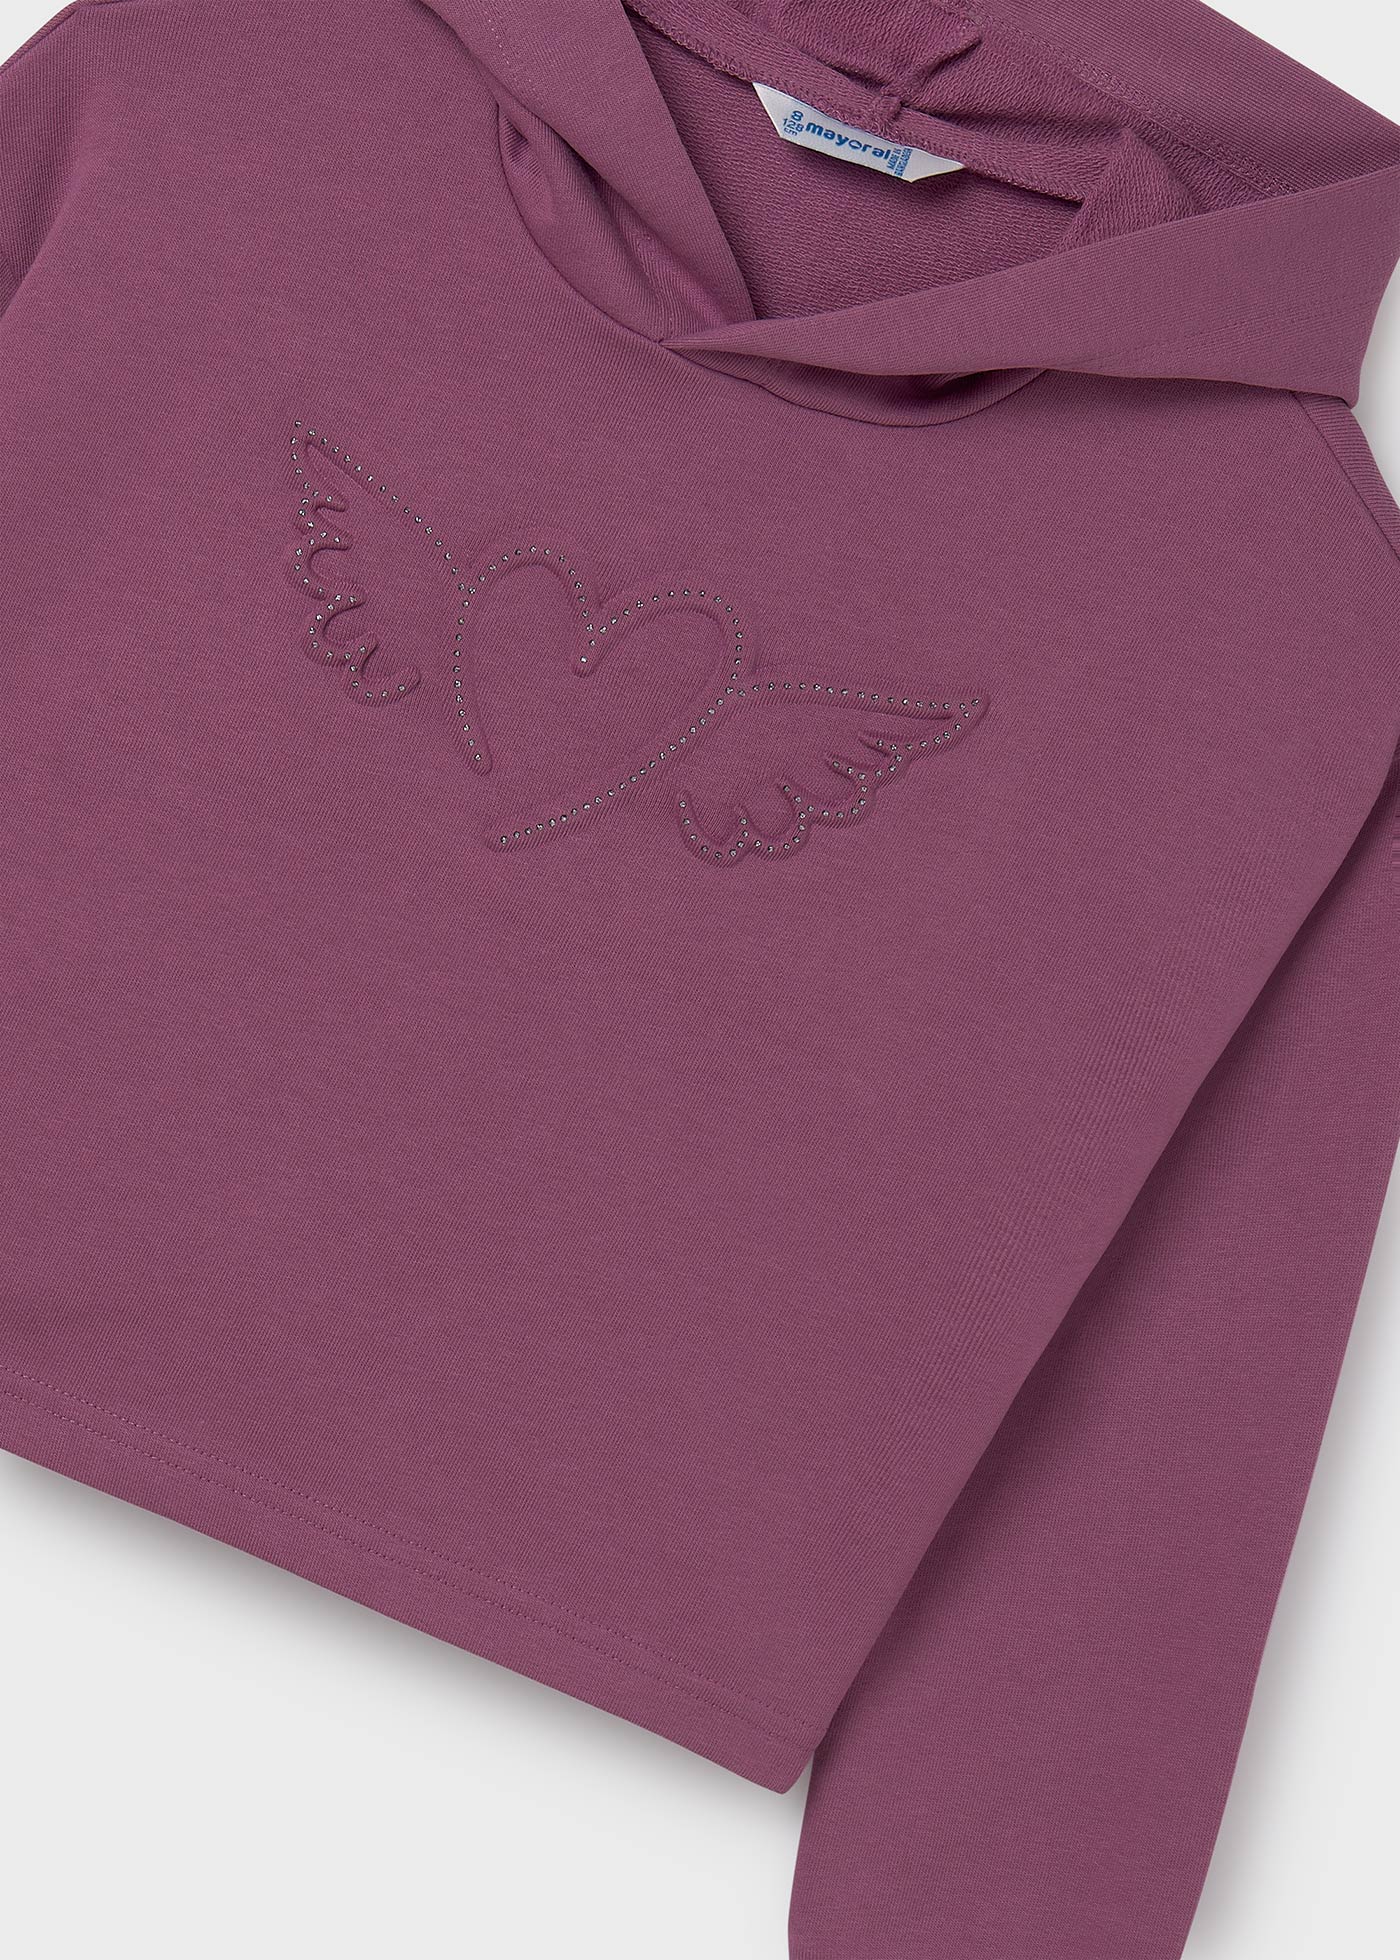 Sweatshirt heart print for girls